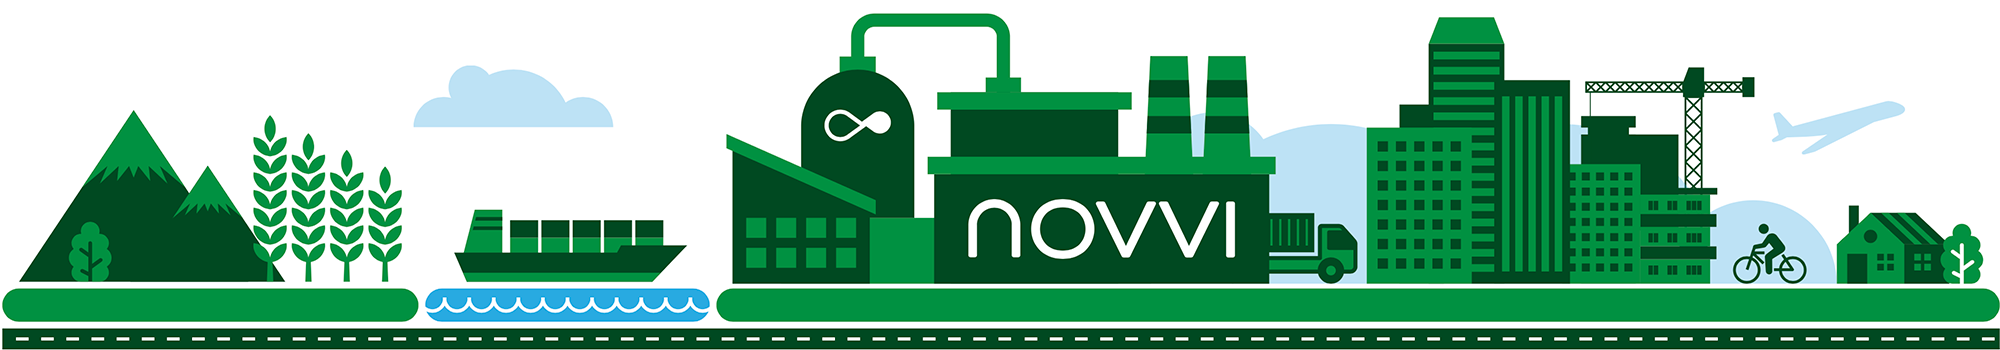 Novvi manufacturing graphic